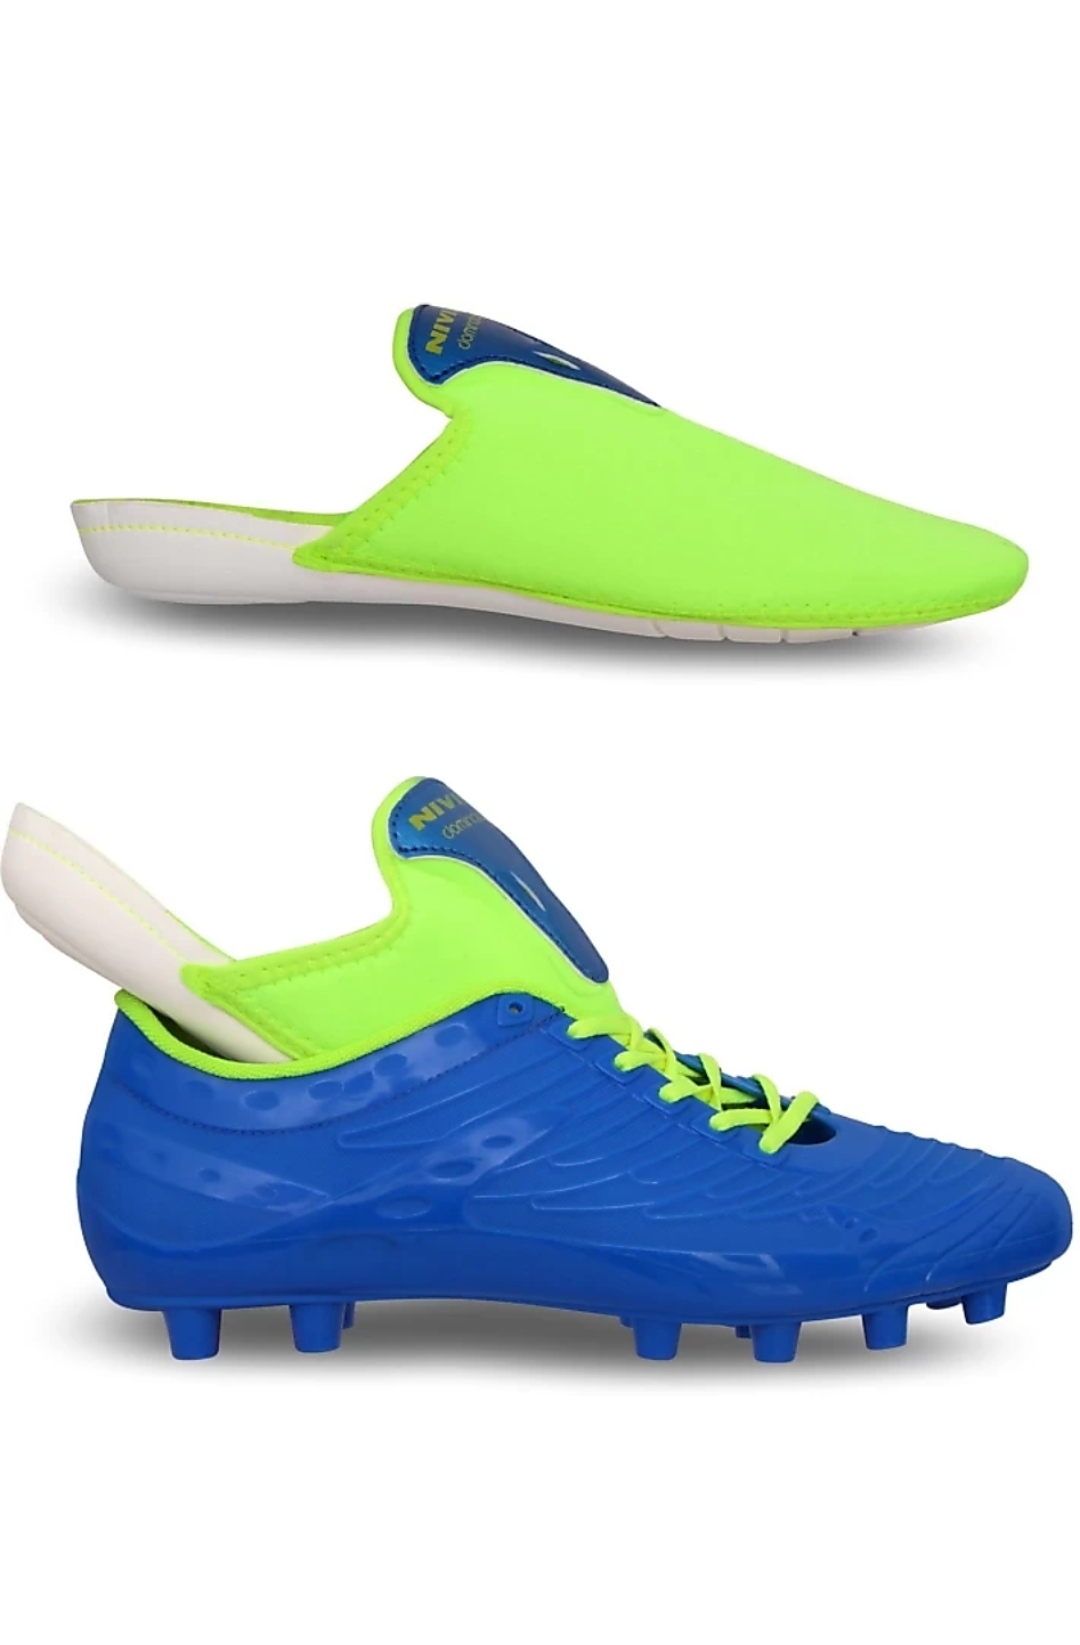 Nivia Dominator Football Shoes For Men 